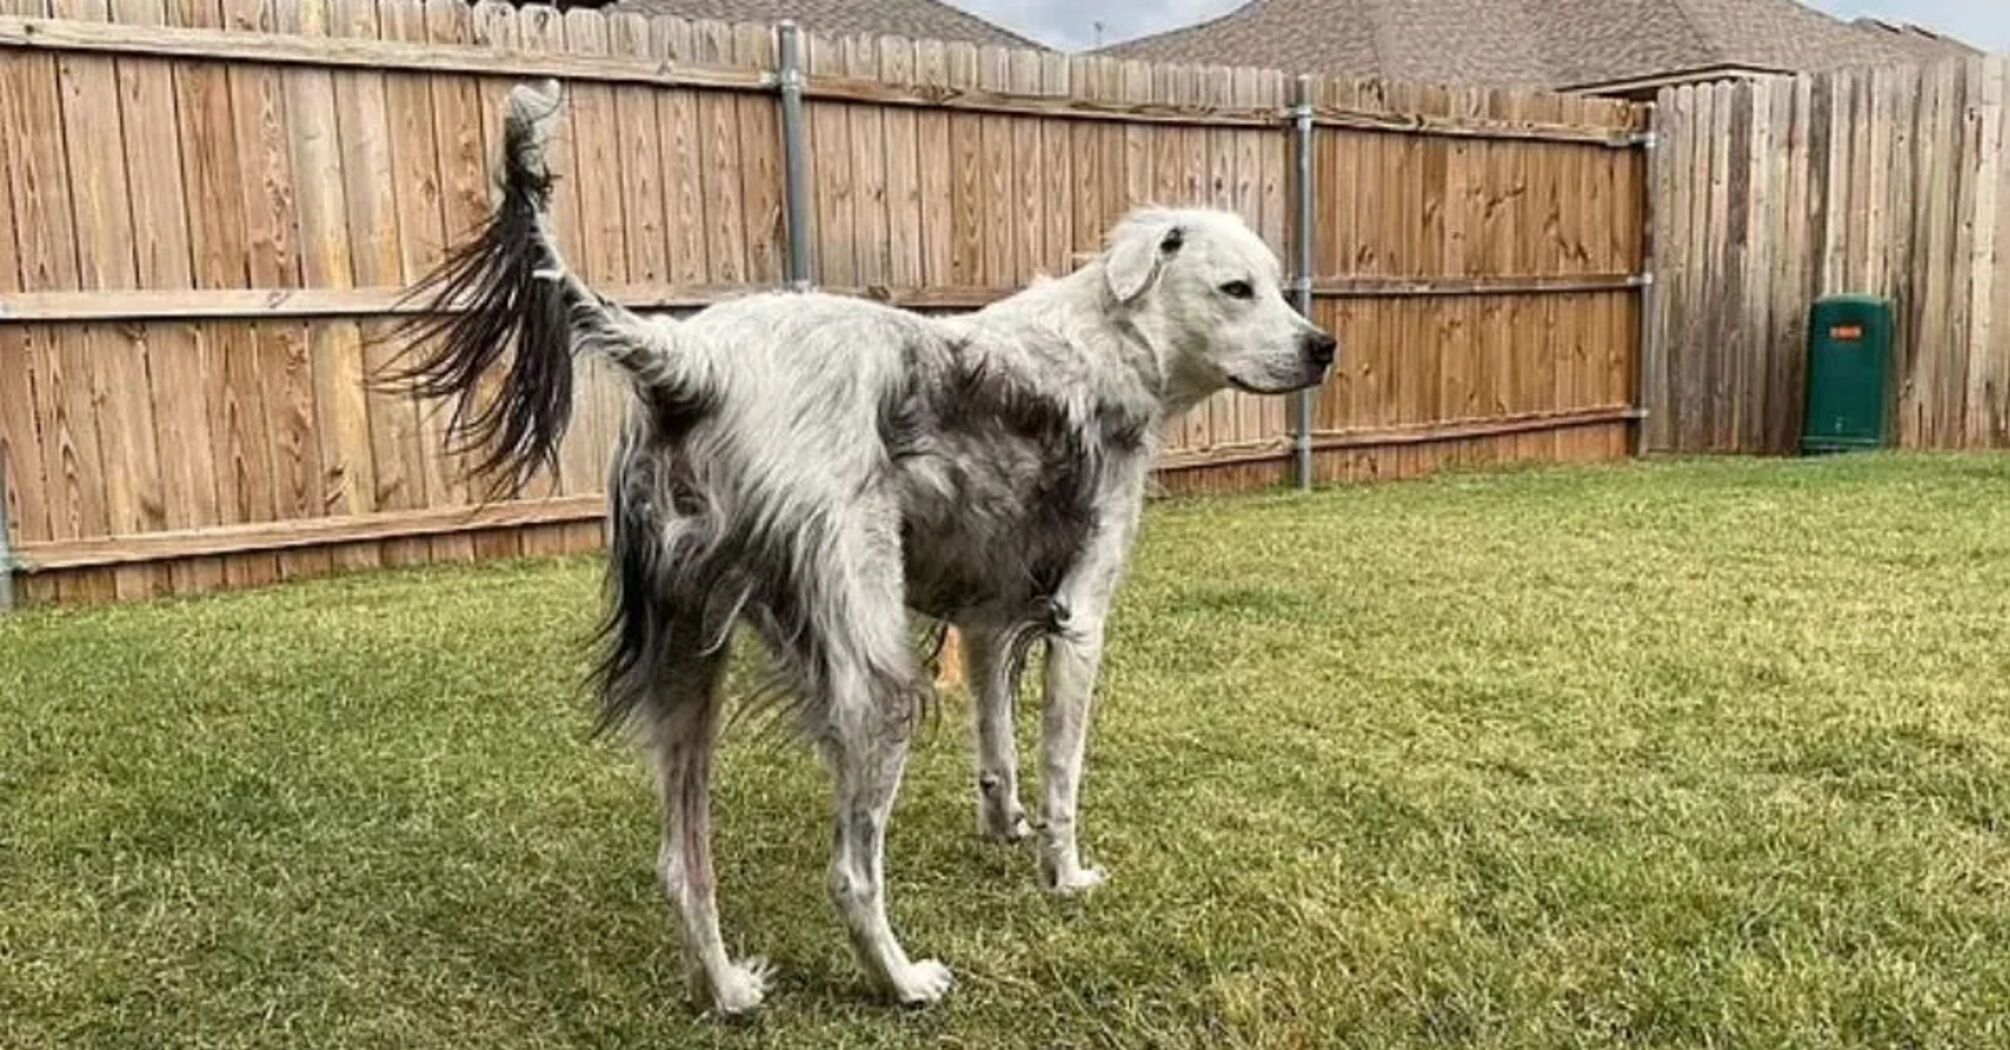 Black dog turned completely white due to illness